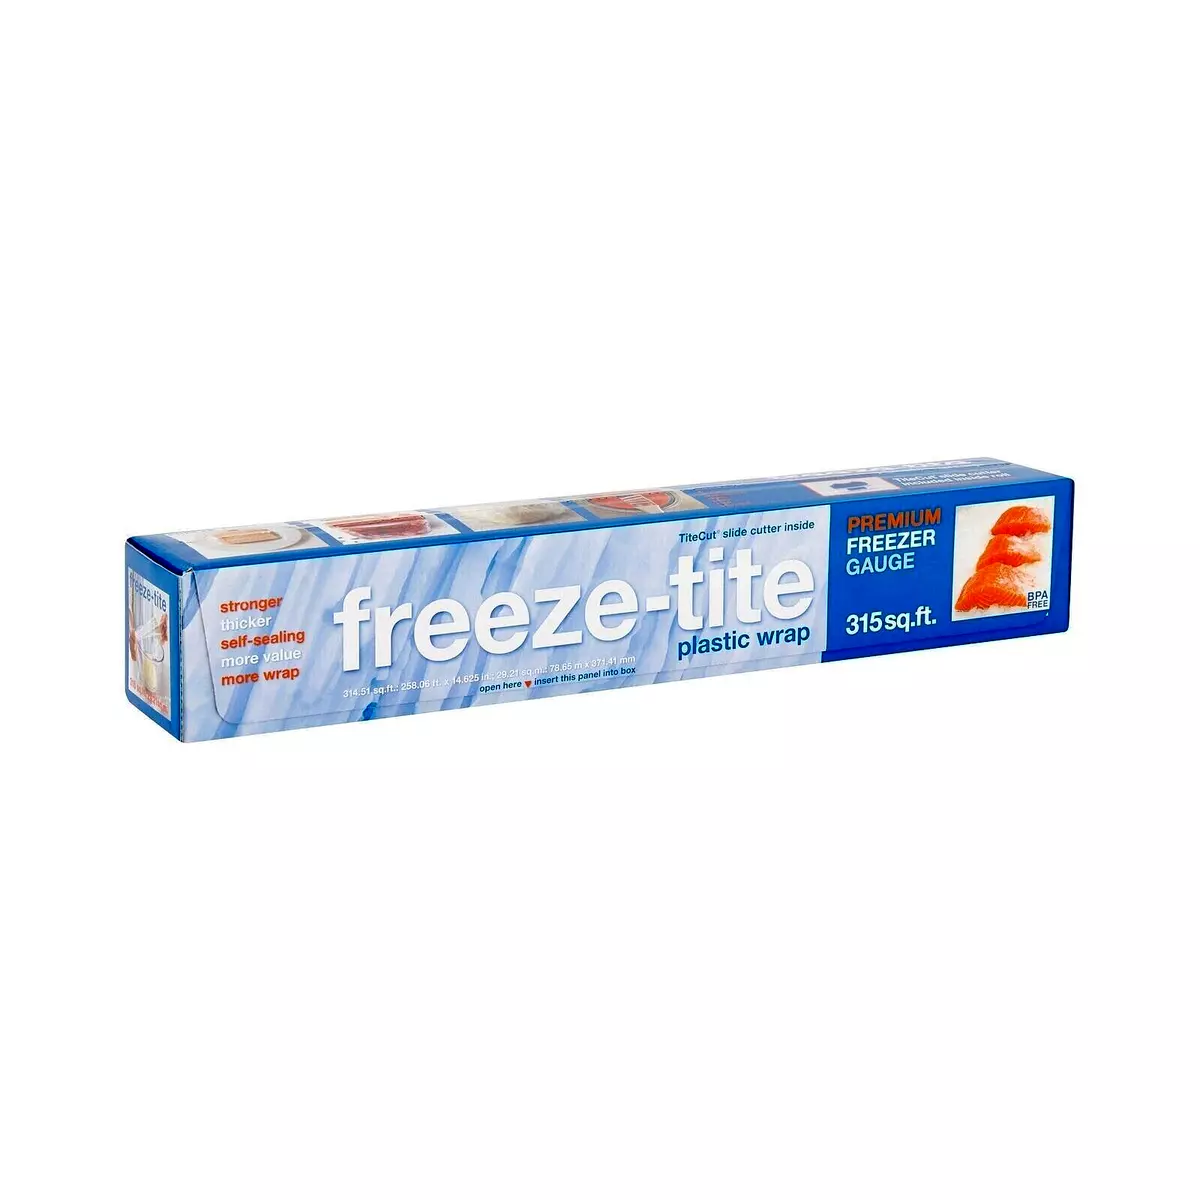 Freeze-Tite Plastic Wrap